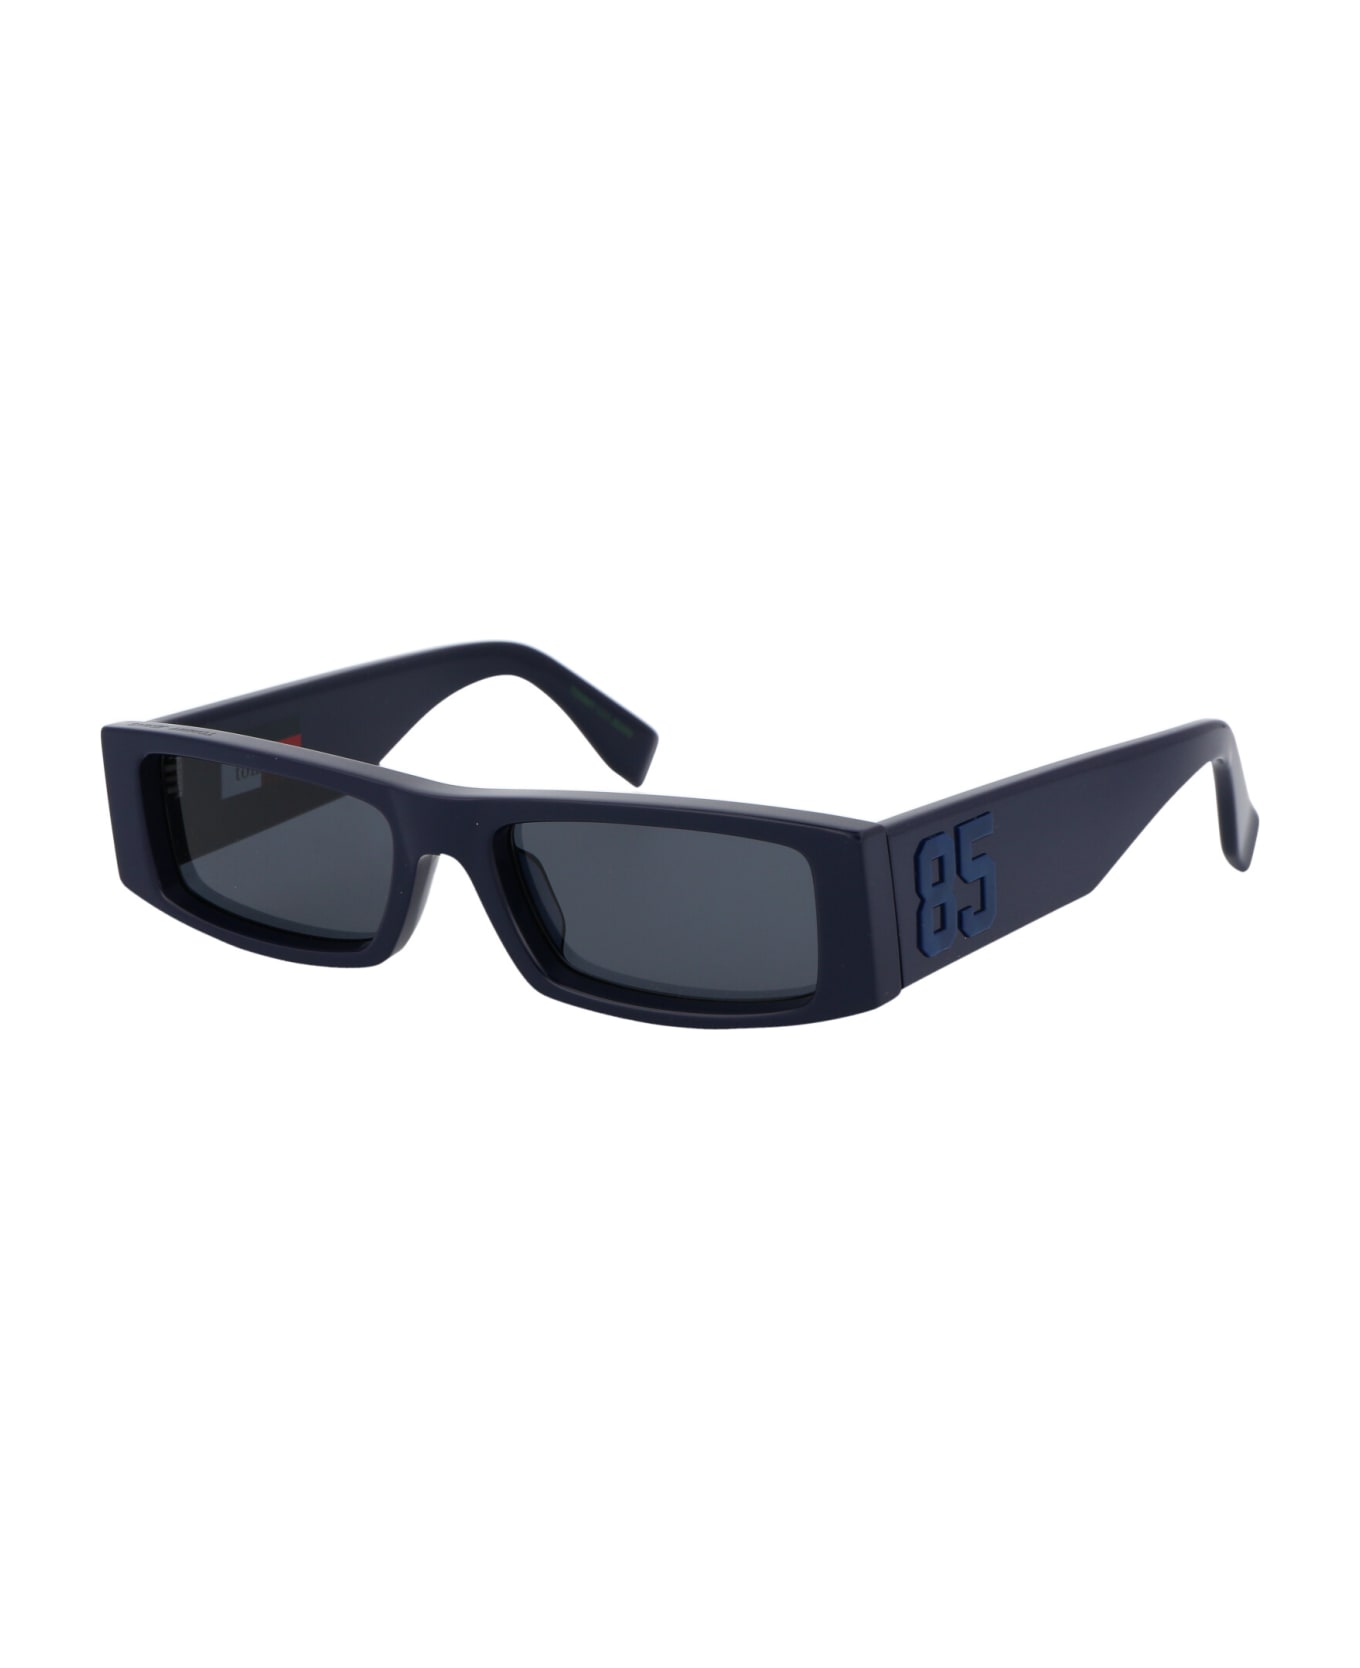 Tommy Hilfiger Tj 0092/s Sunglasses - PJPIR BLUE サングラス